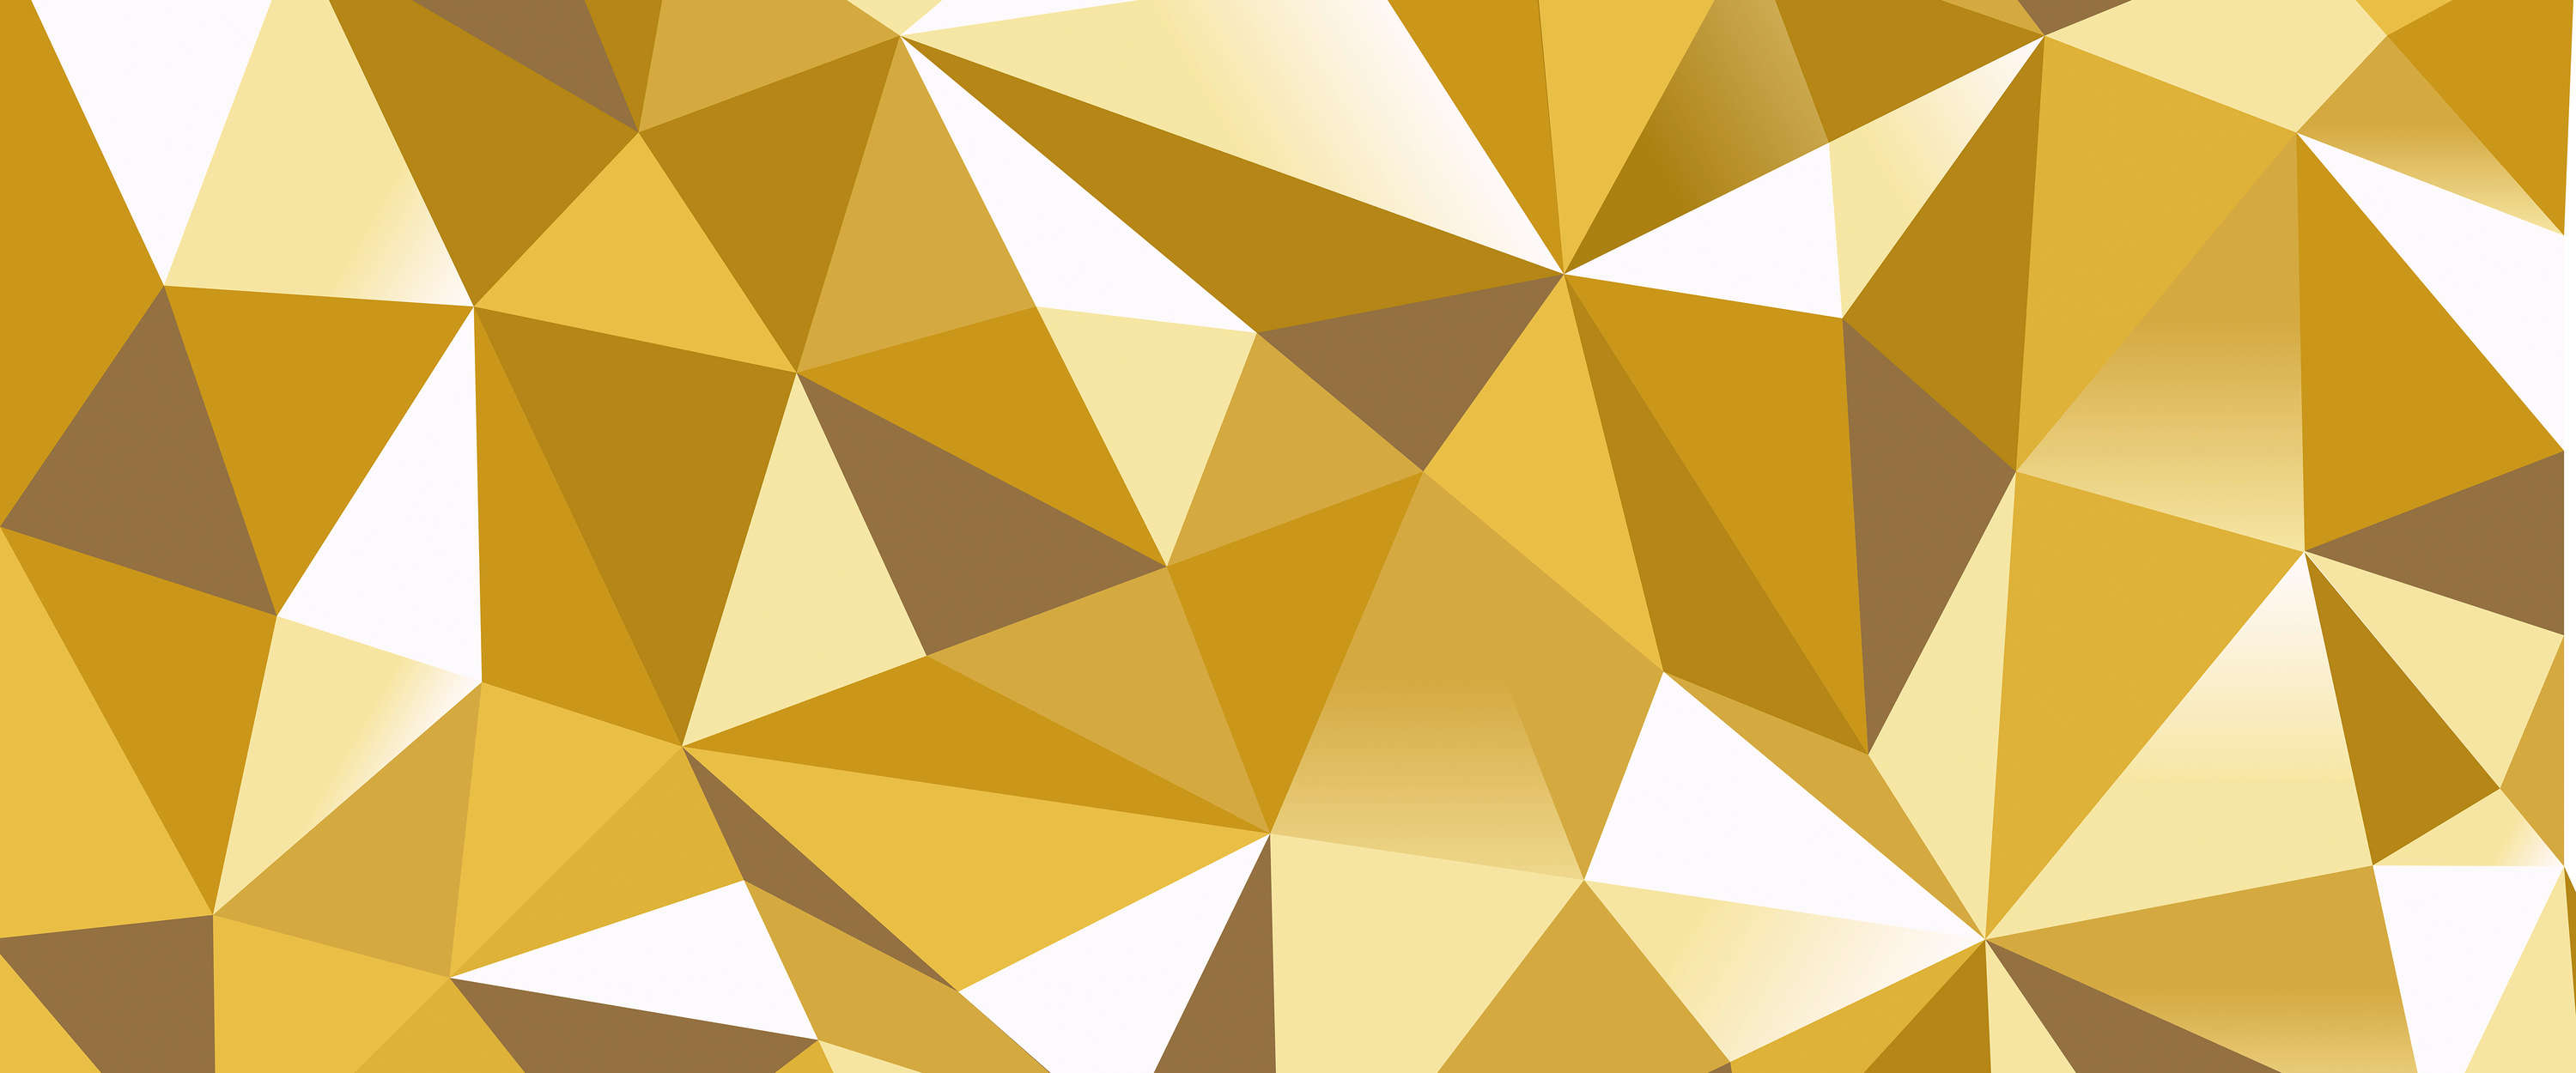             3D look mural - Polygon Artwork Gold Crystals
        